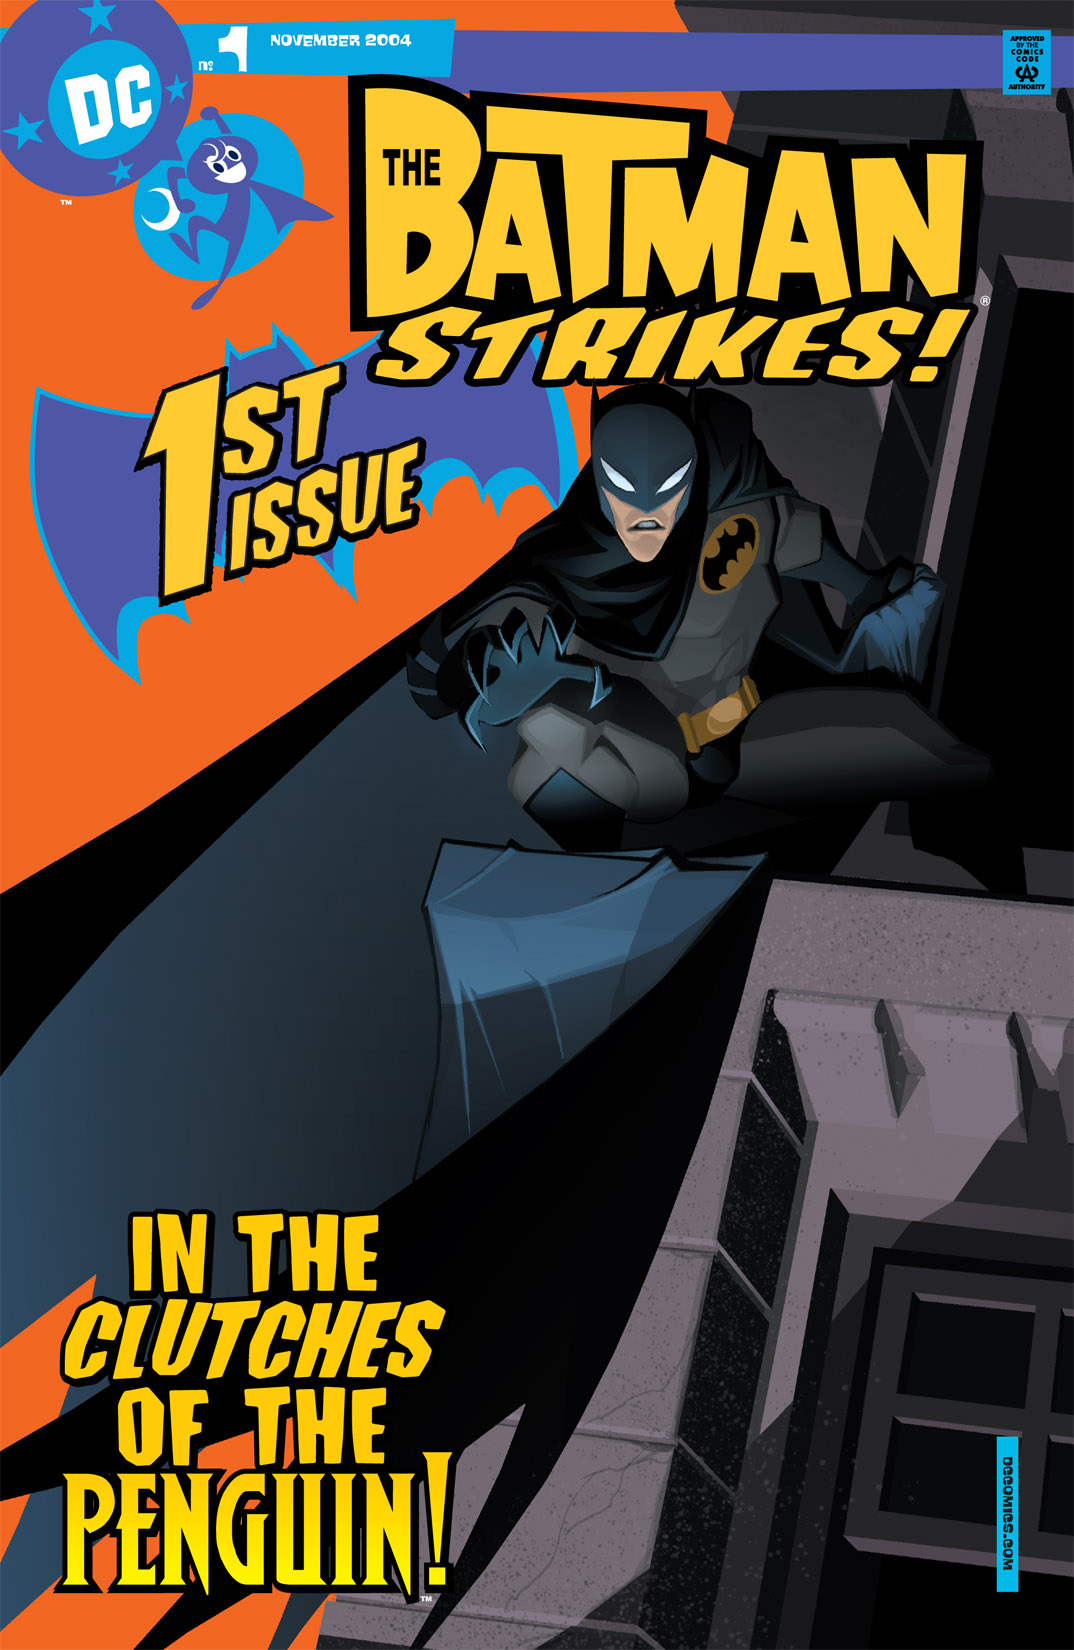 The Batman Strikes ReadAllComics